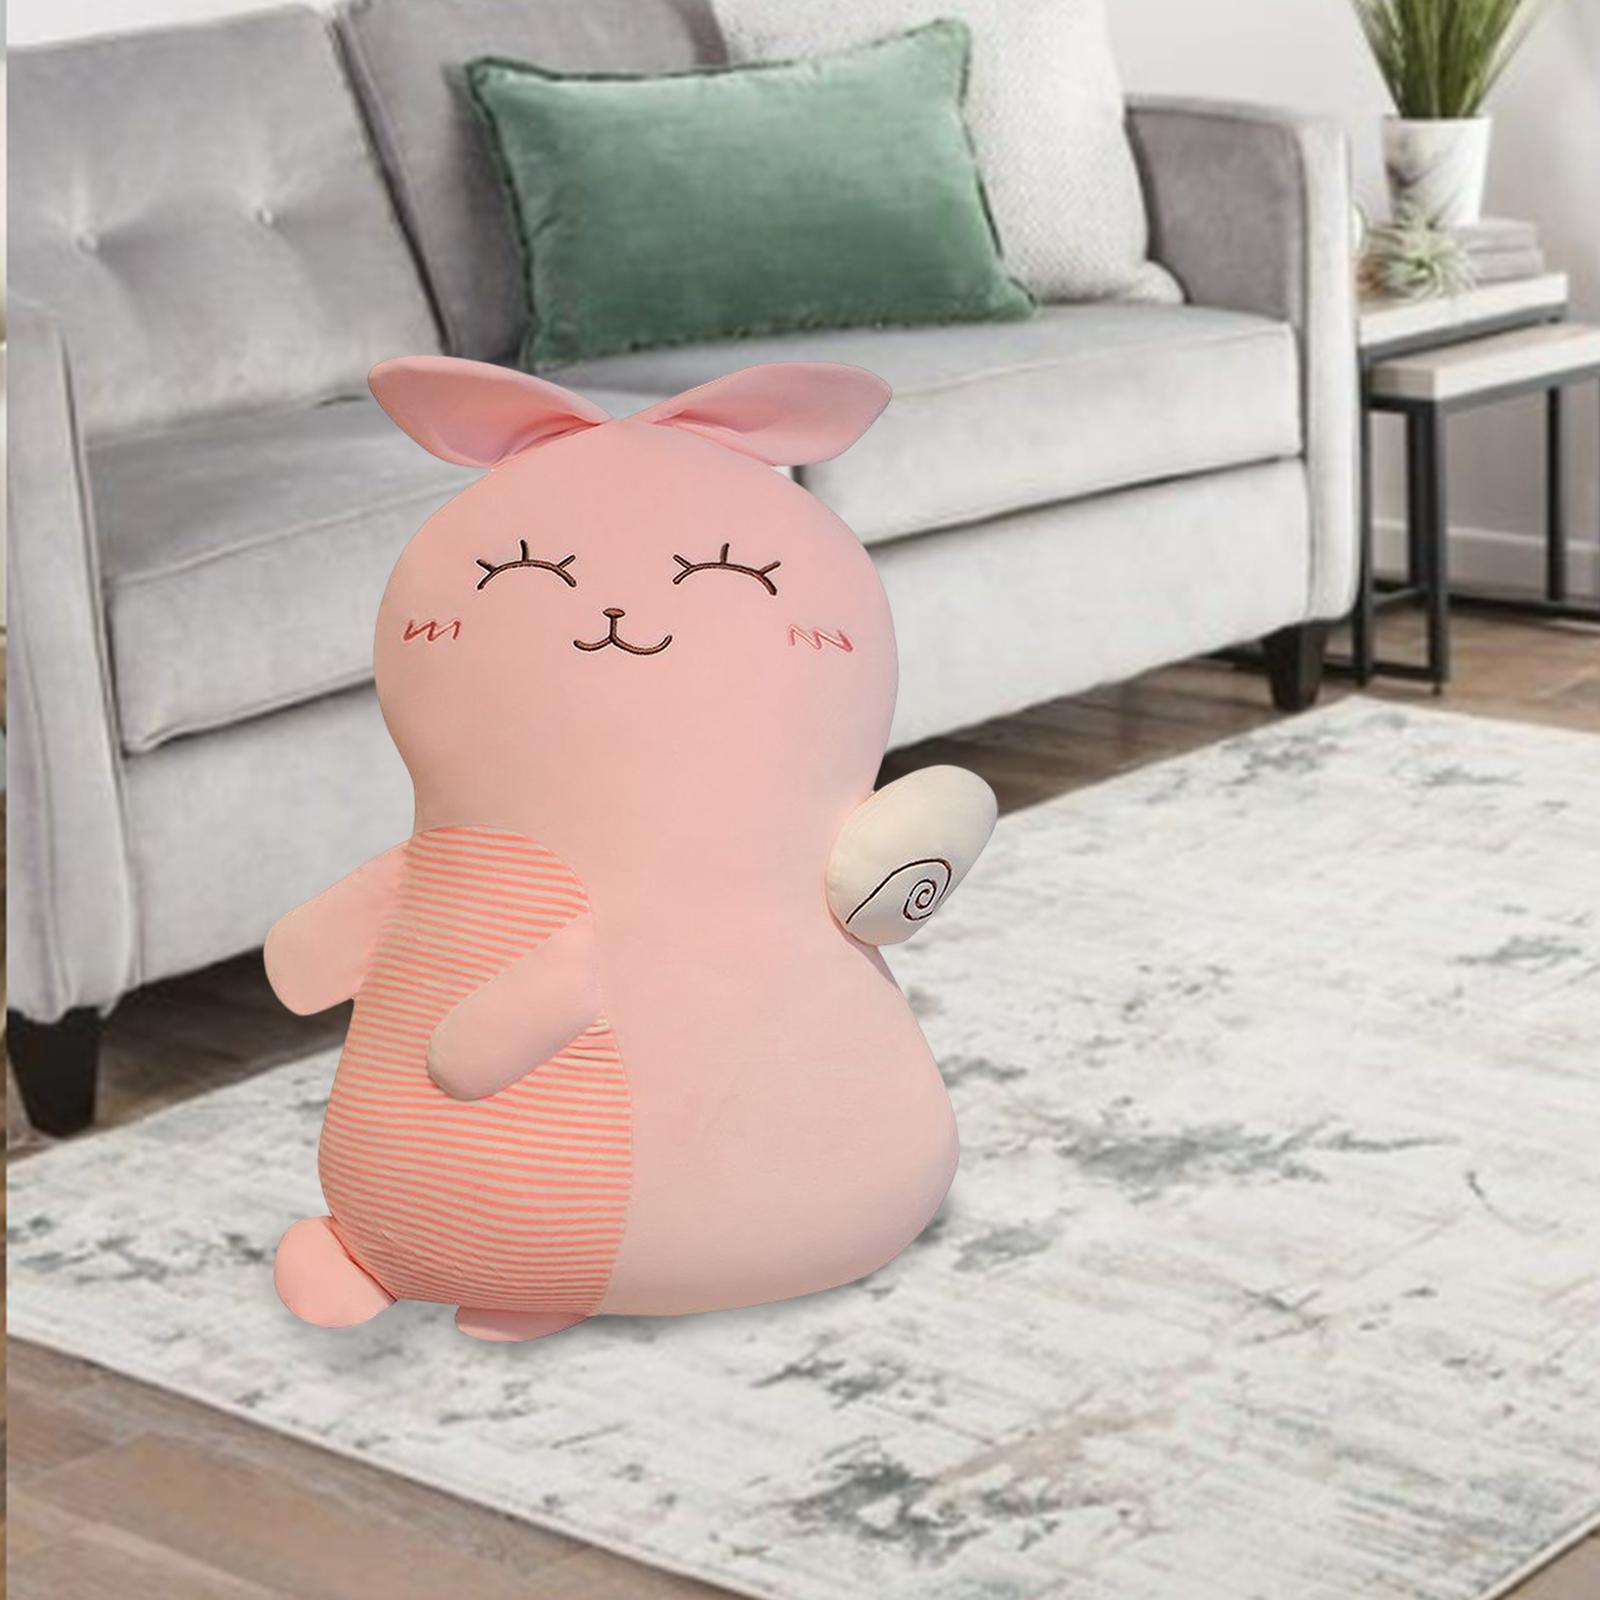 Stuffed Animal Plush Toy Cartoon Pillow Kids Gift Living Room Ornament Pink